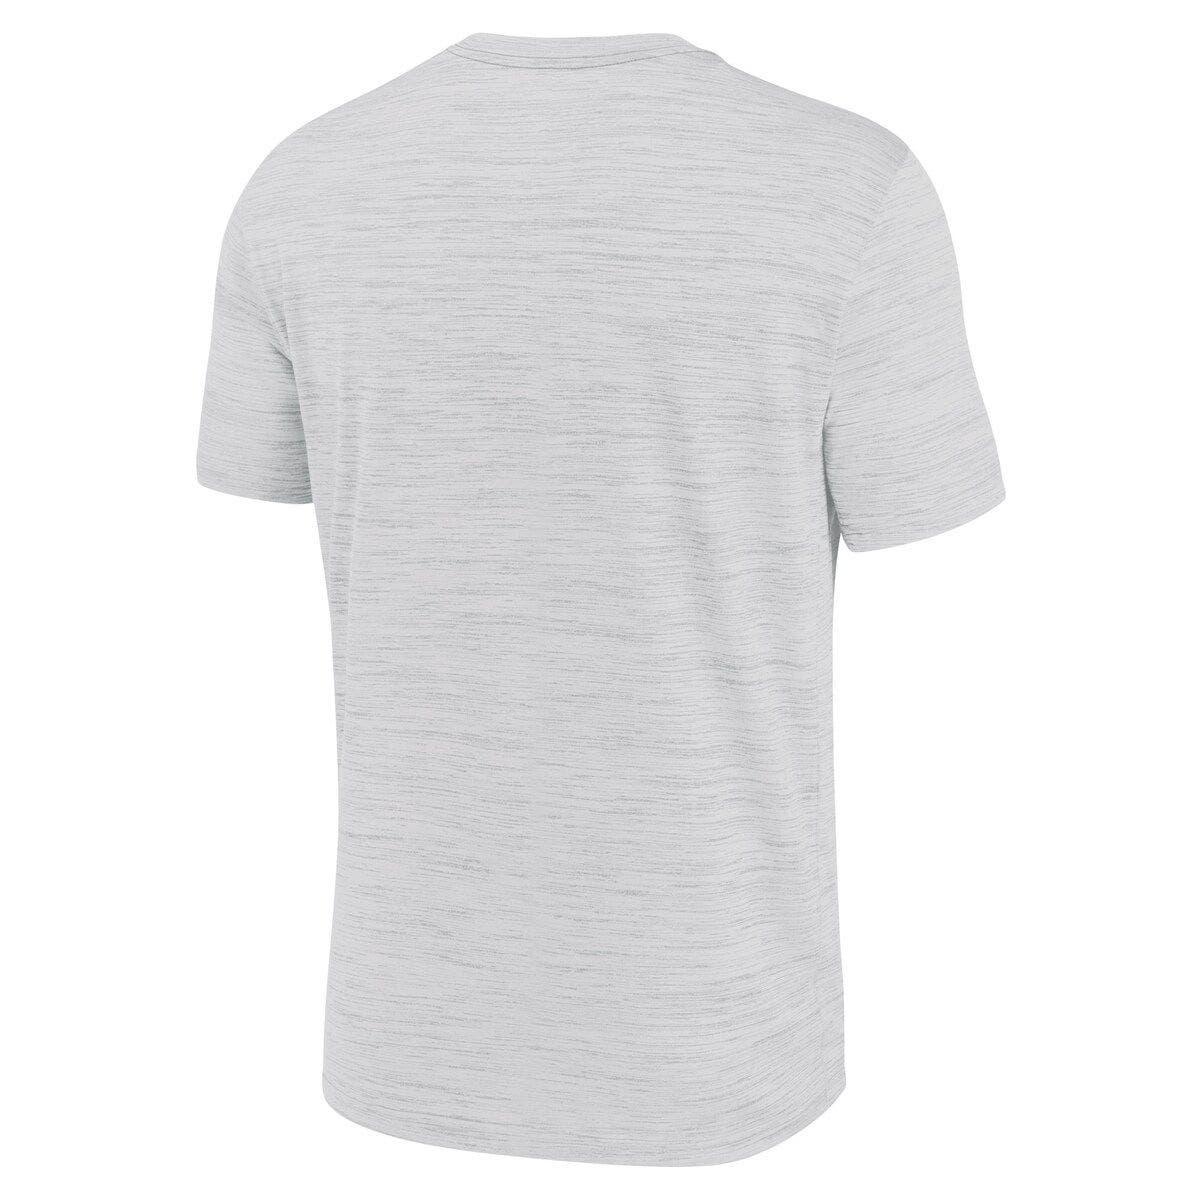 Nike / Men's Los Angeles Dodgers Gray Legend Velocity T-Shirt